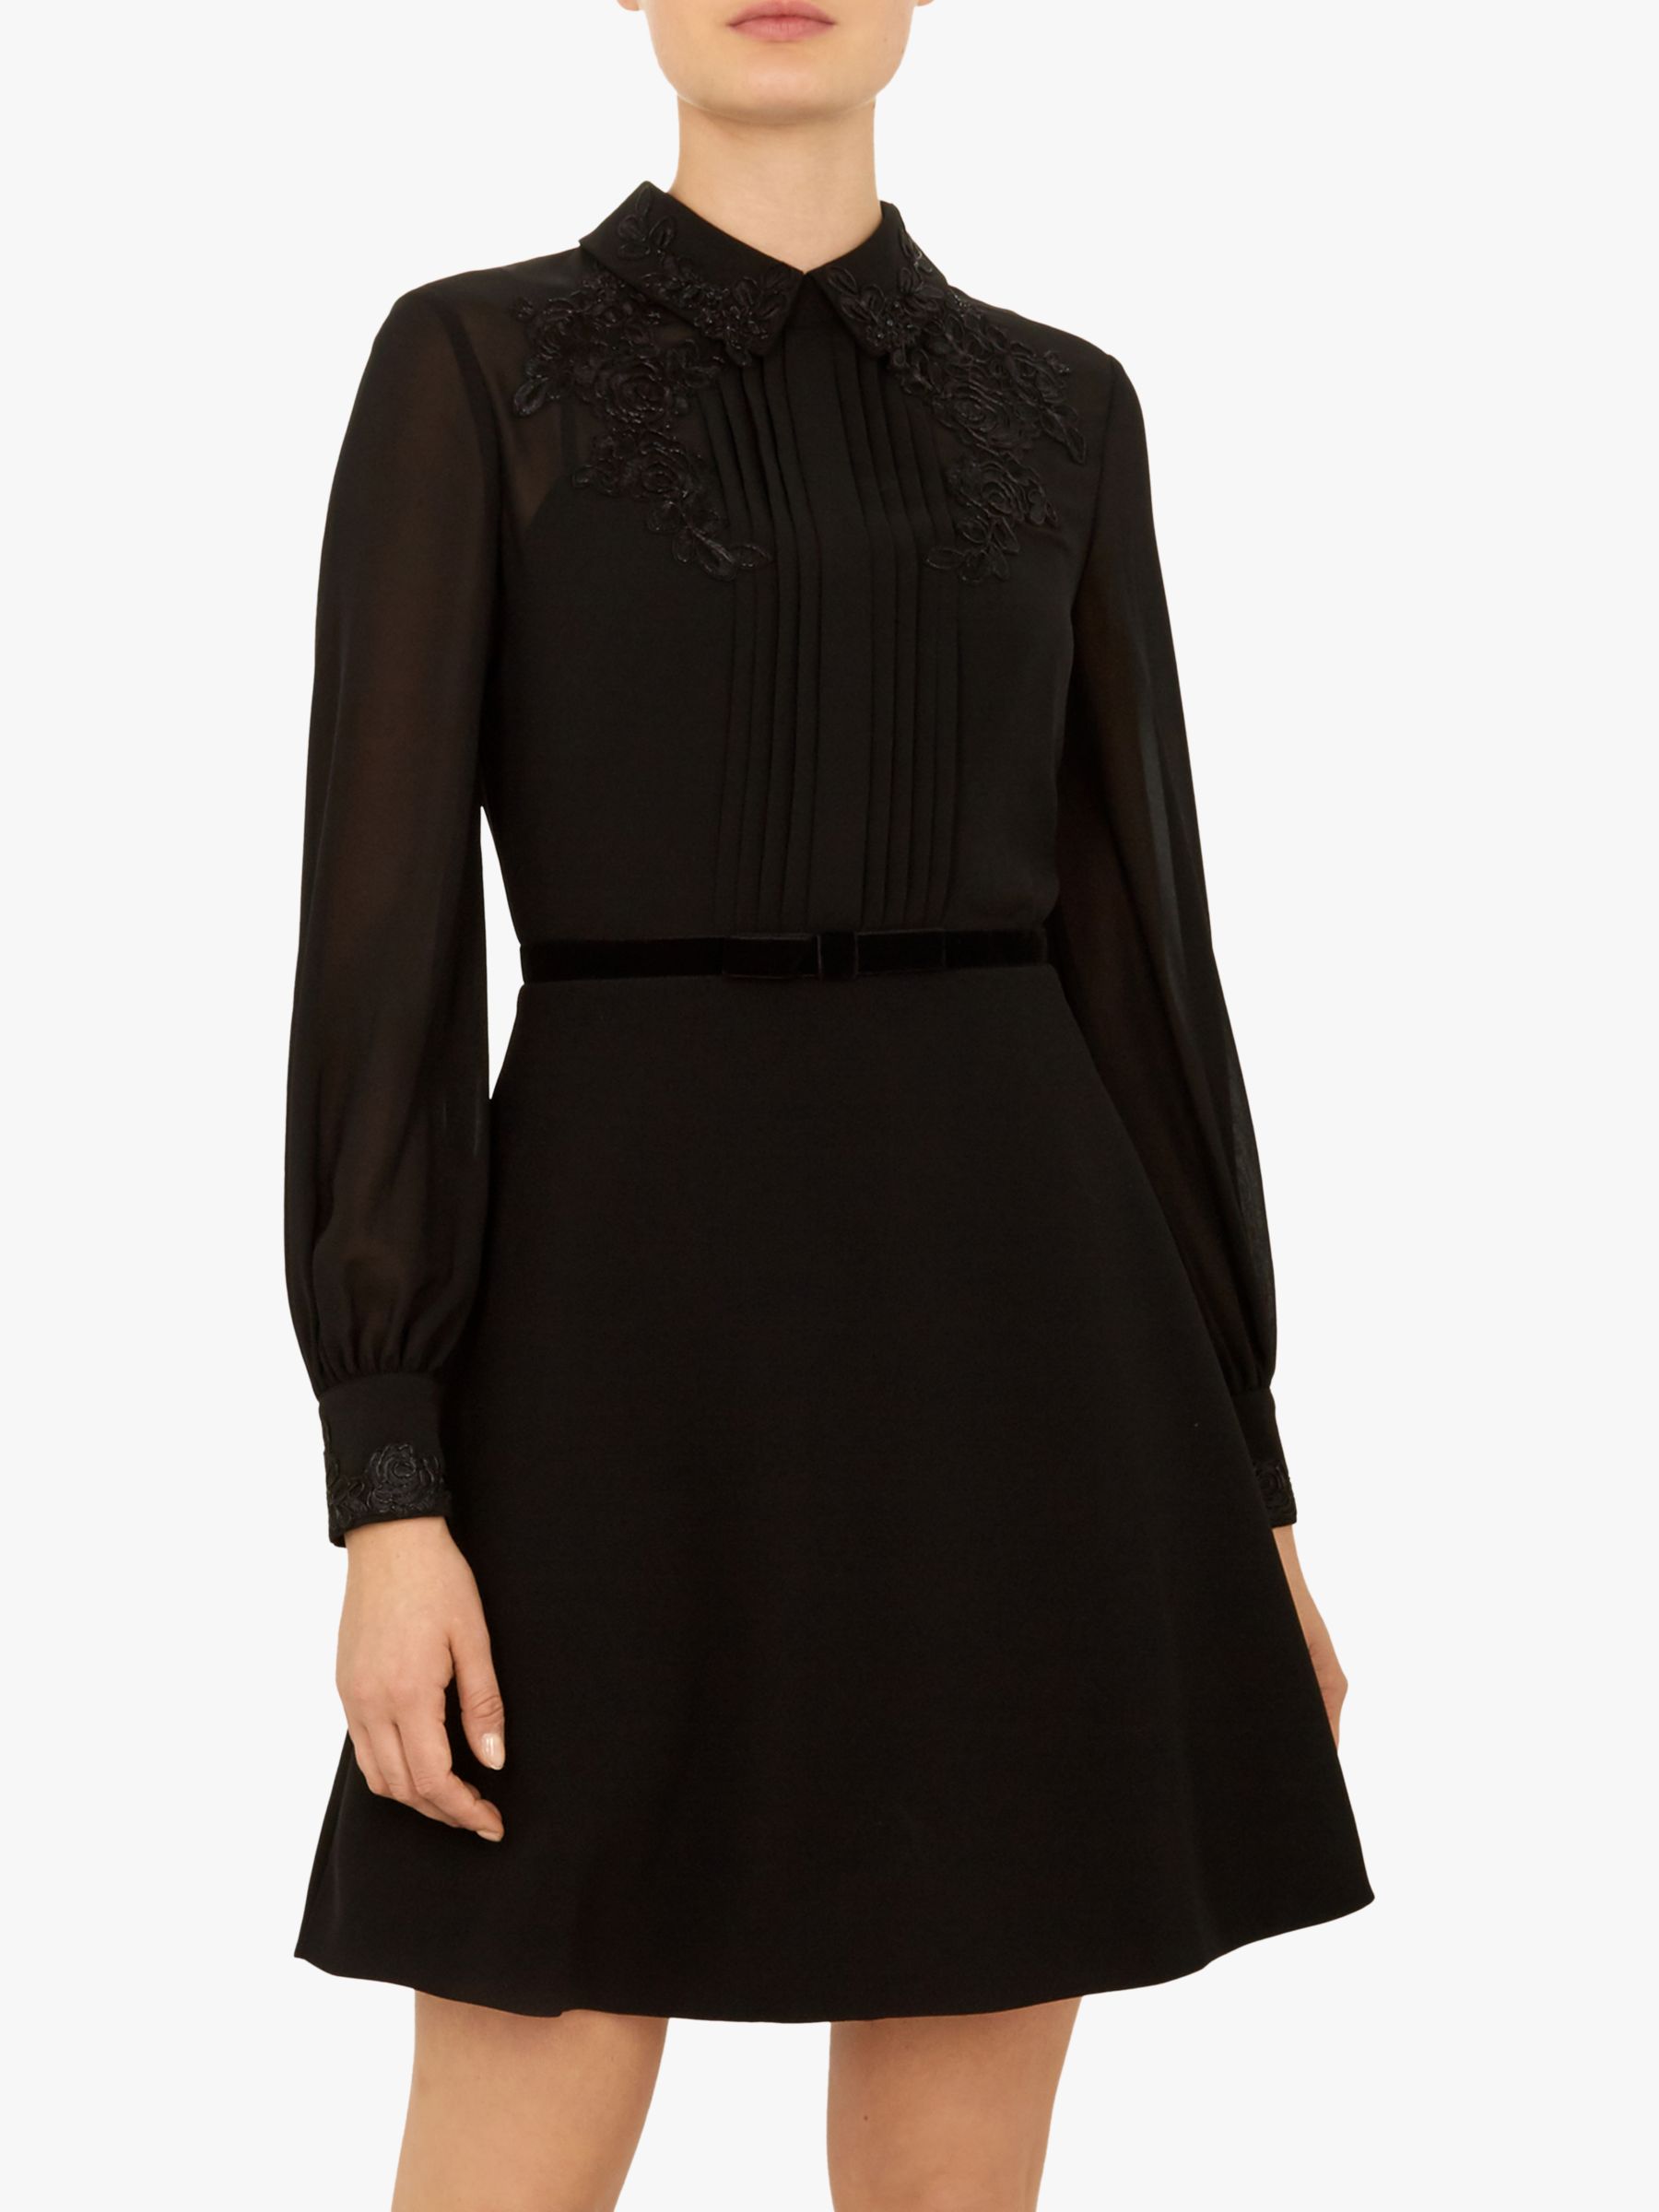 Ted Baker Amaali Embellished Tunic Dress, Black at John Lewis & Partners